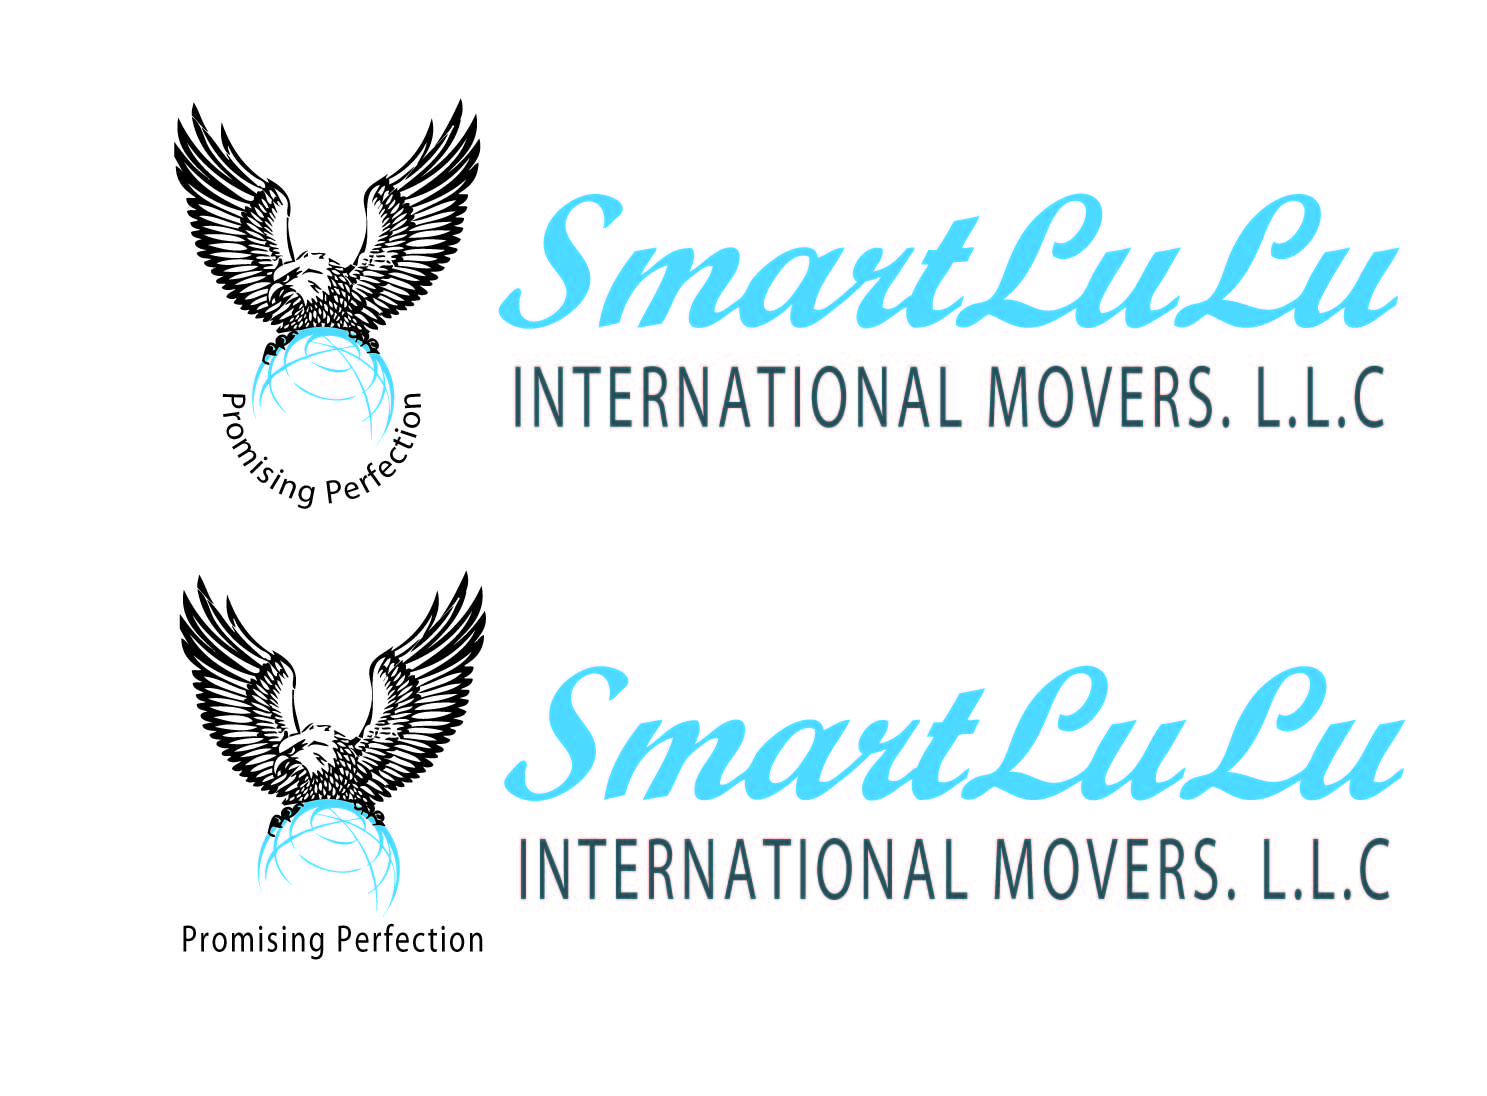 Smart LuLu International Movers LLC